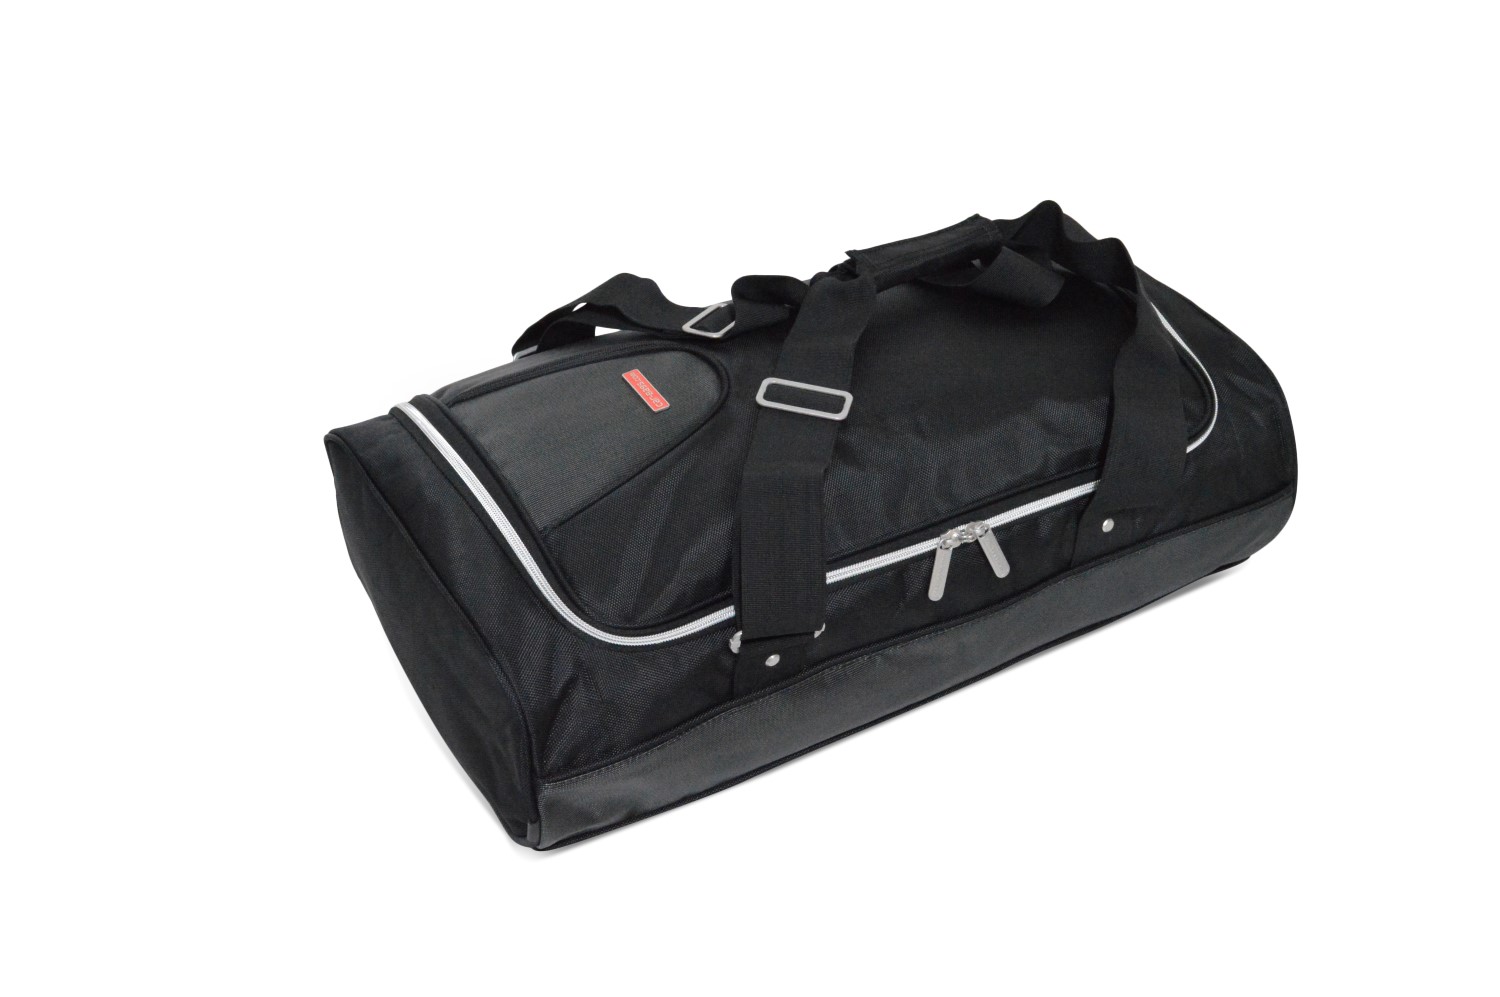 Set maletas especifico AUDI Q3 (8U) 2011- suv CAR-BAGS (3x Trolley + 3x  Bolsa de mano) 370,00€ - Q3 (8u) - Audi - Carbags - Maletas especificas -  Transporte